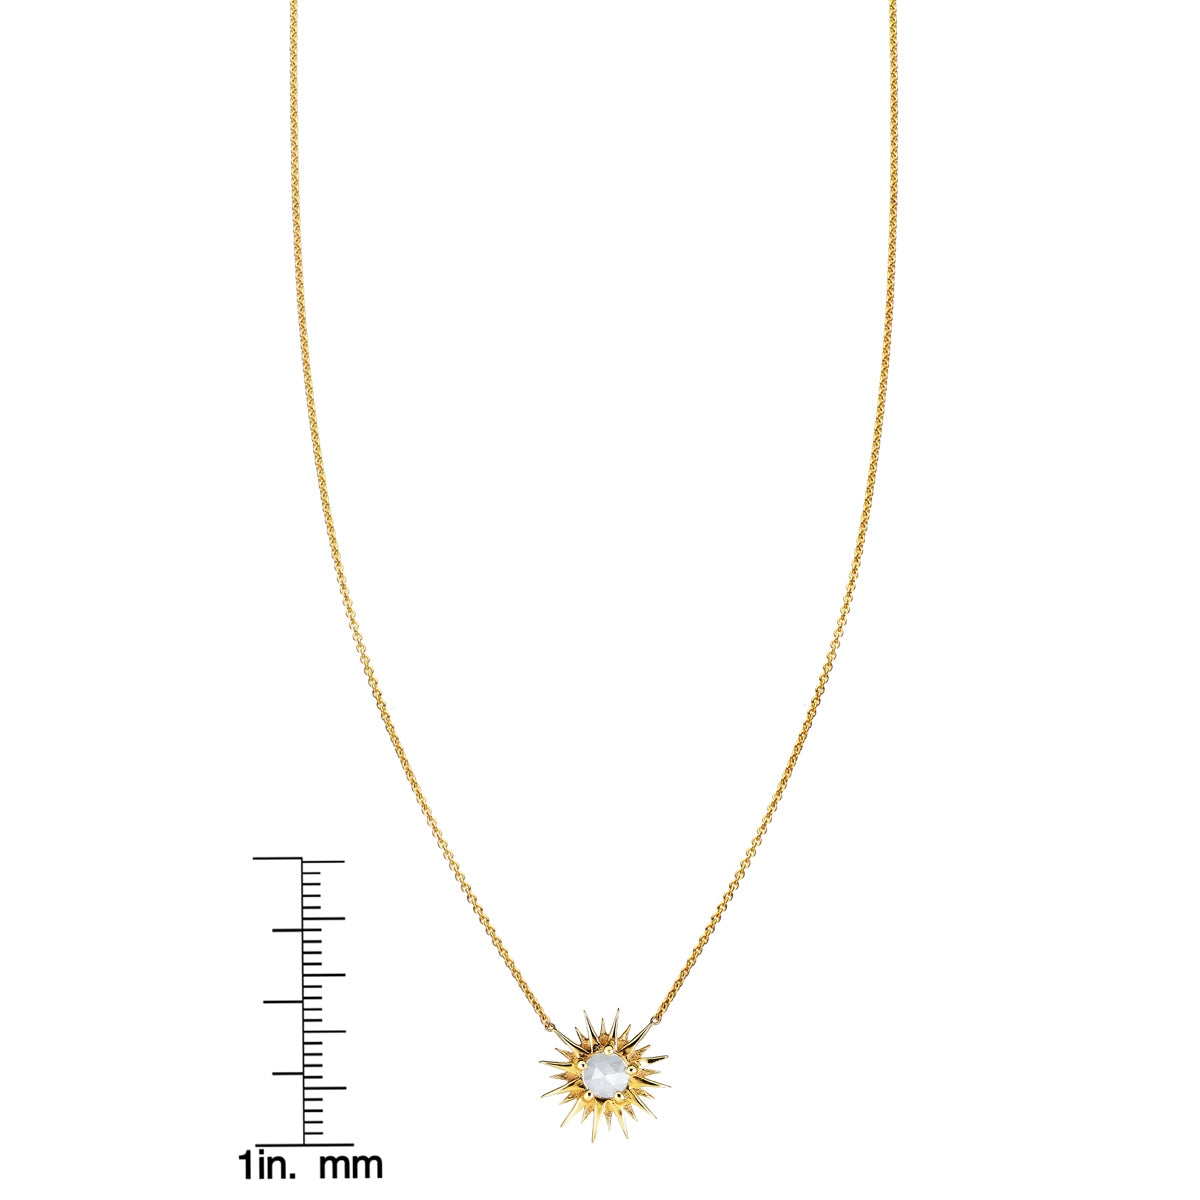 rose cut diamond sunburst necklace_1_f140c8a5 aeee 481f bbd4 3268dba79104